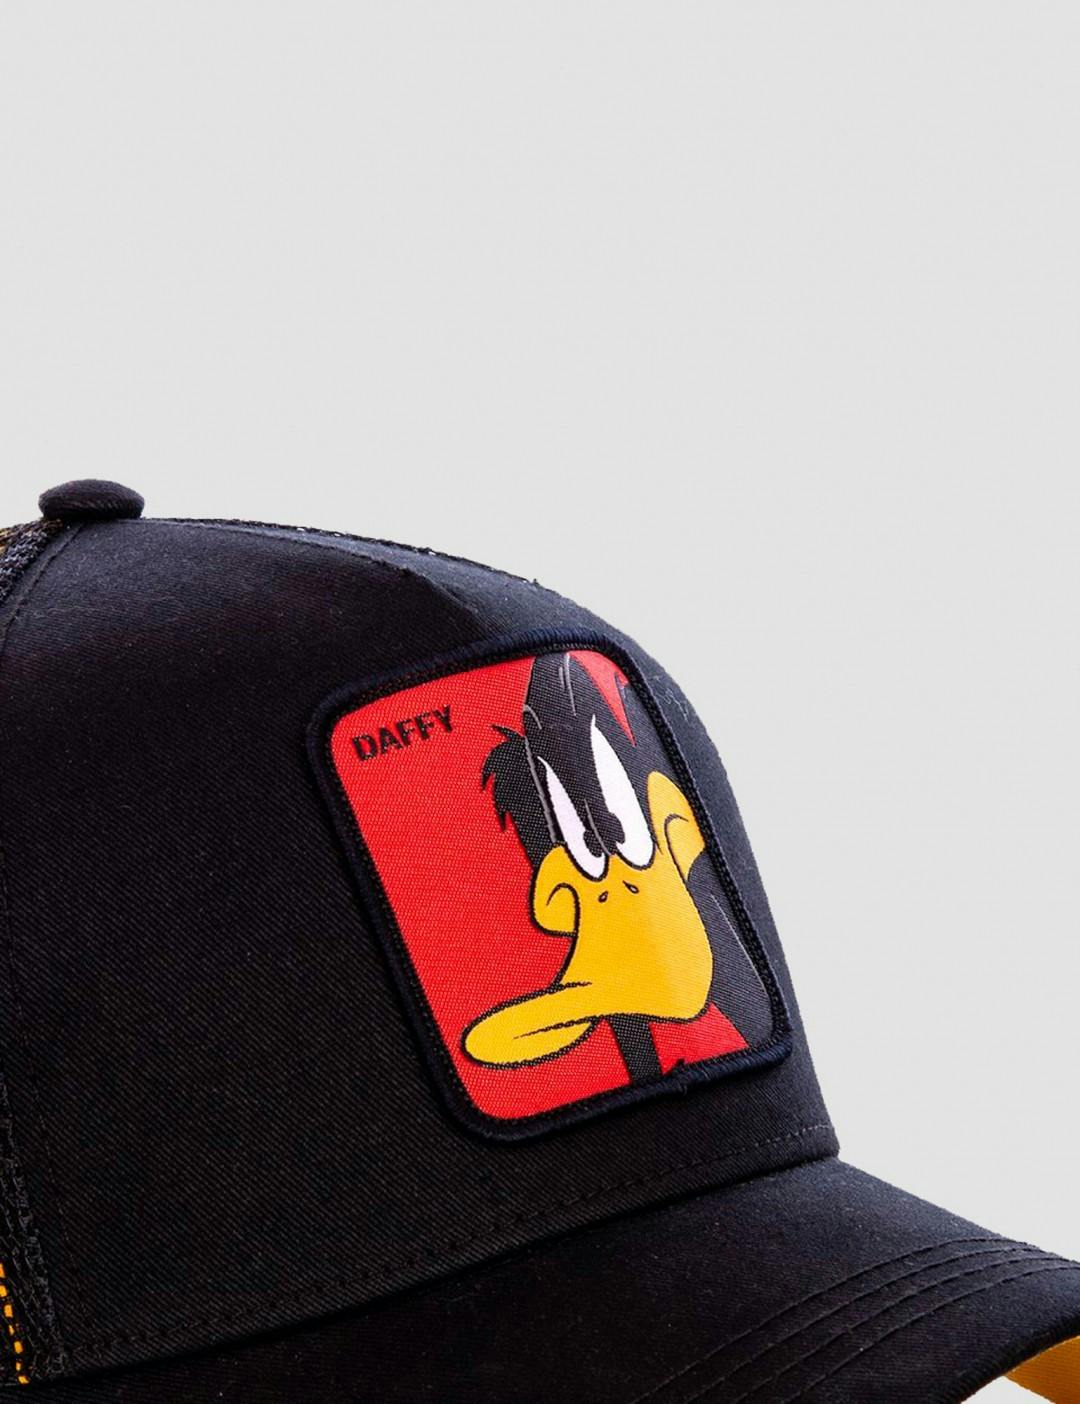 Daffy Duck Trucker